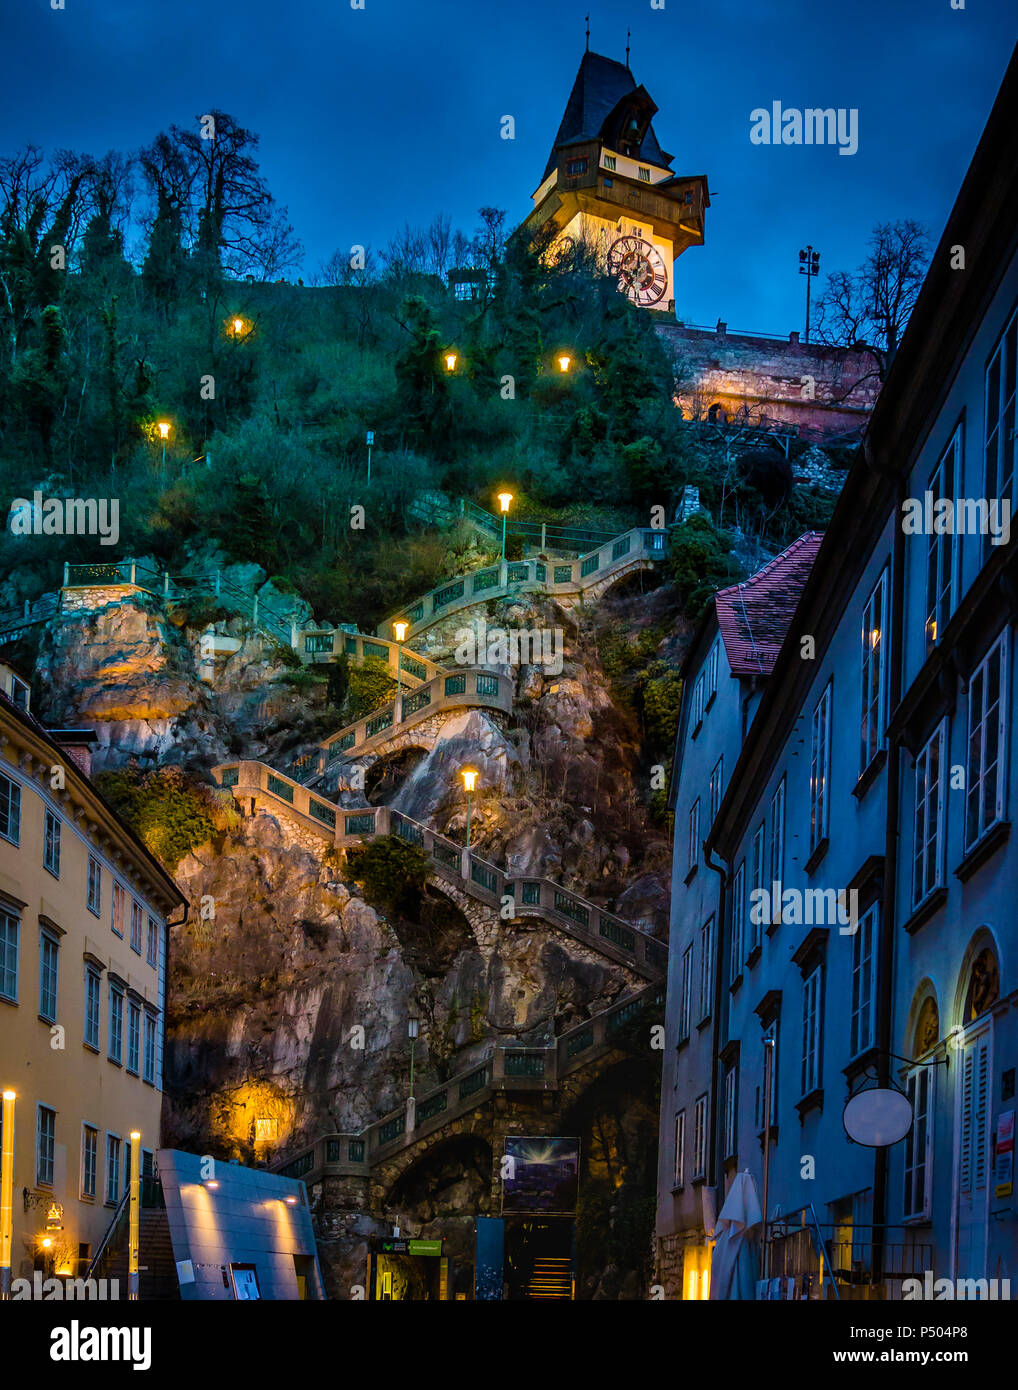 Austria, Styria, Graz, Grazer Schlossberg, castle mountain with staircase, clock tower at night Stock Photo